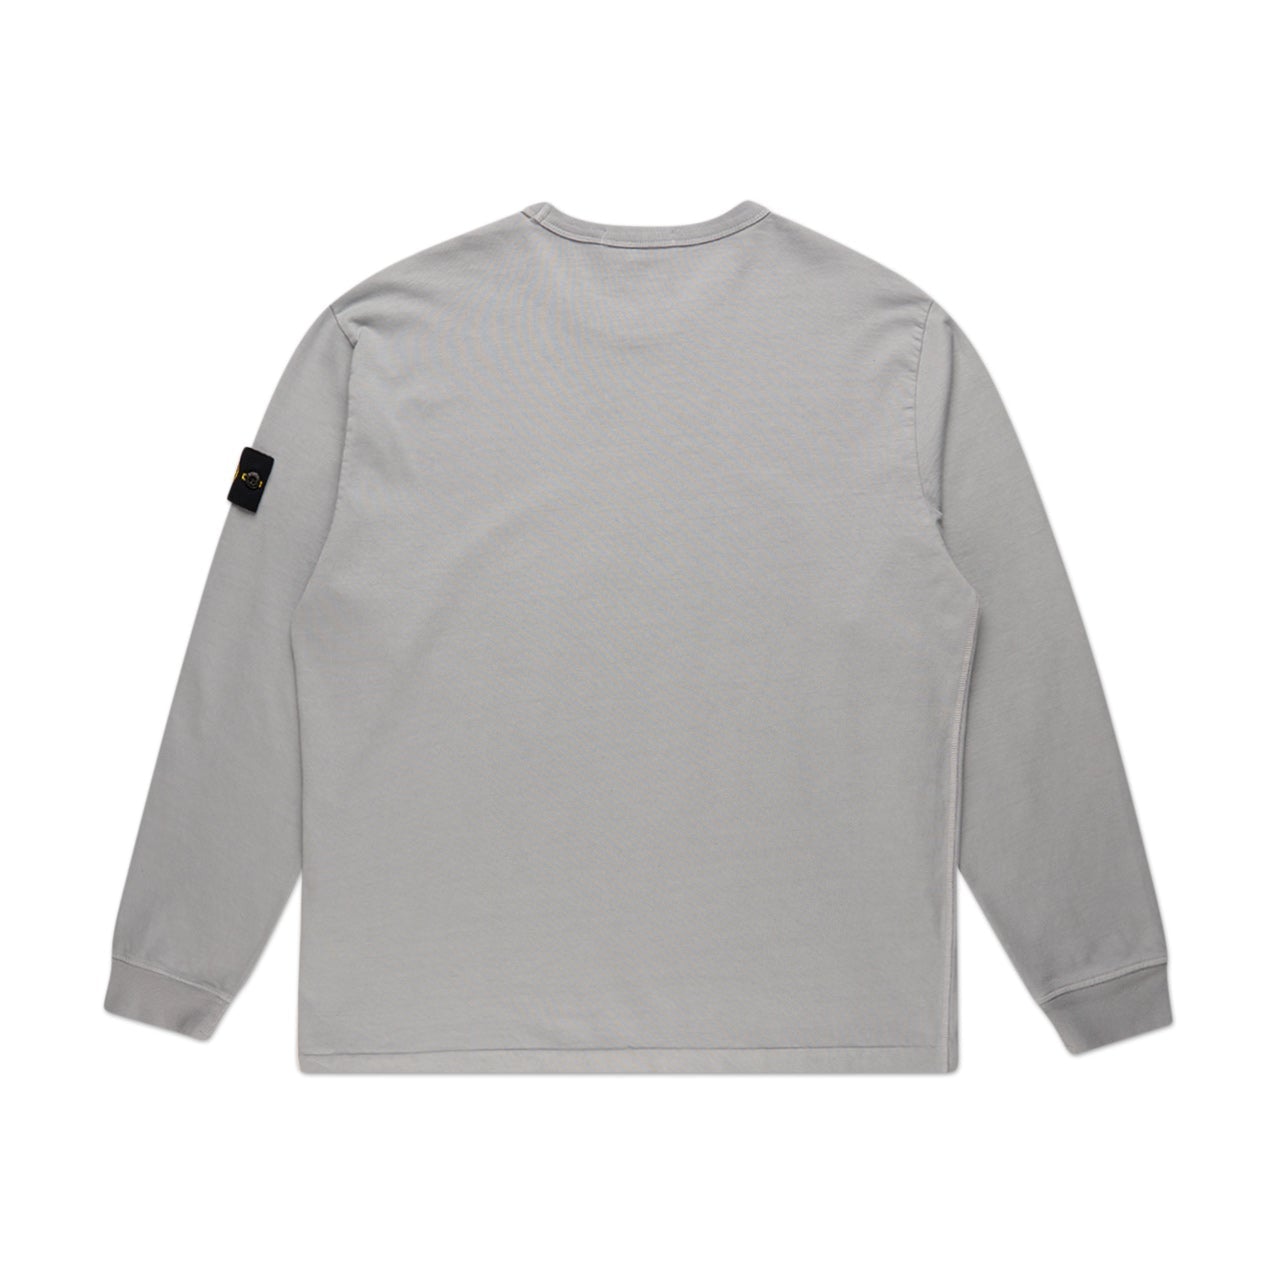 stone island stone island sweatshirt (grey)